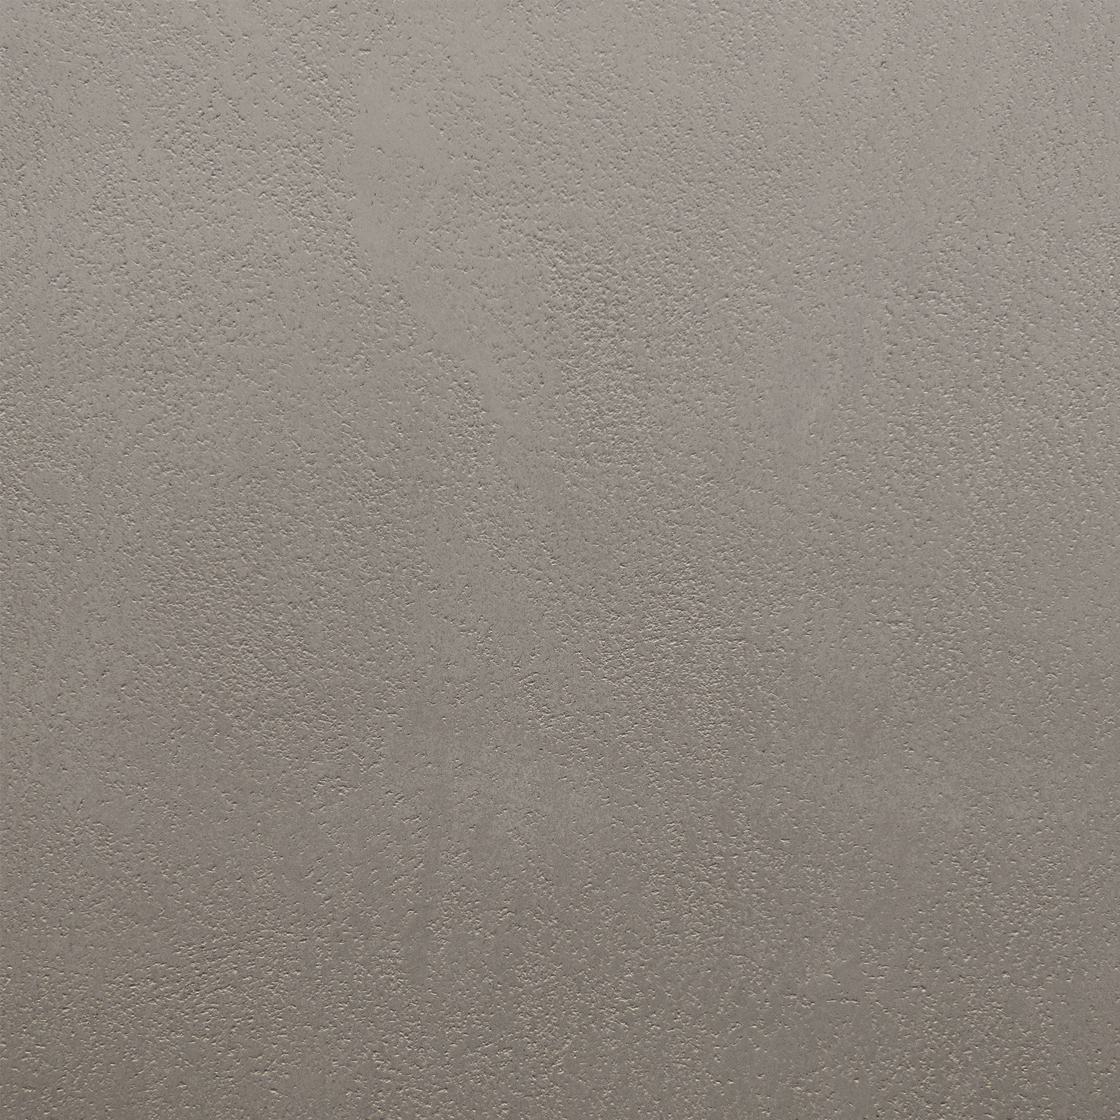 Close up of Armourcoat leatherstone exterior polished plaster finish - 37